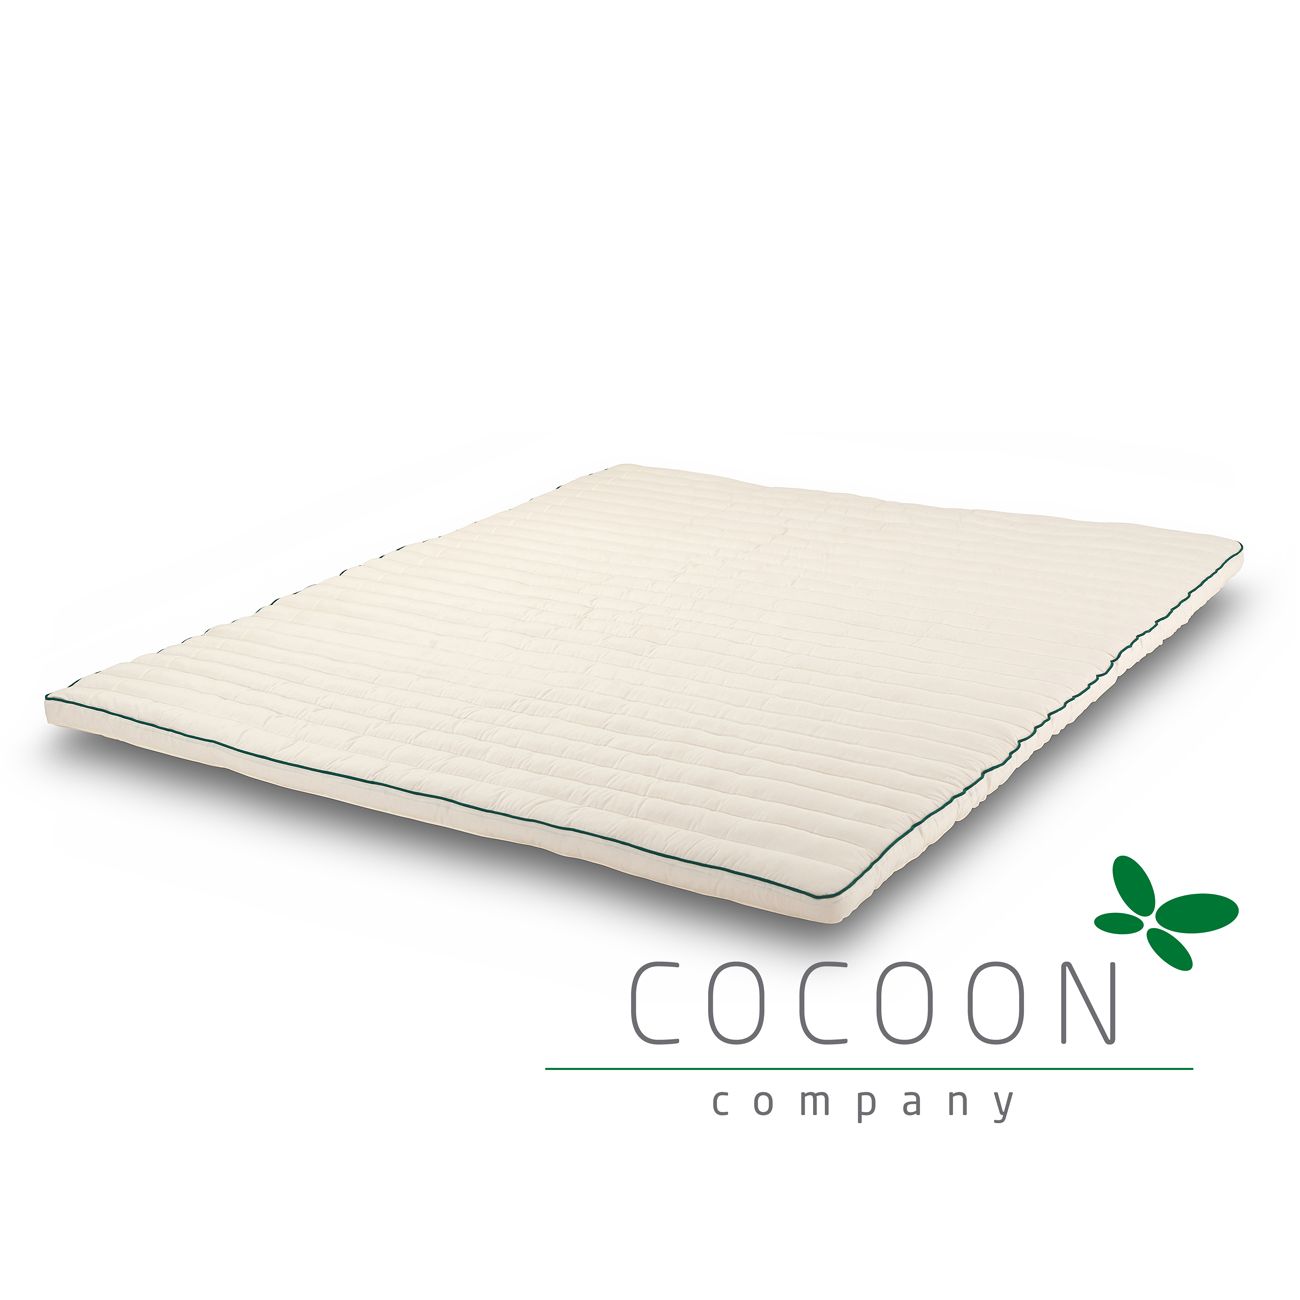 Cocoon company økologisk topmadras 160x200